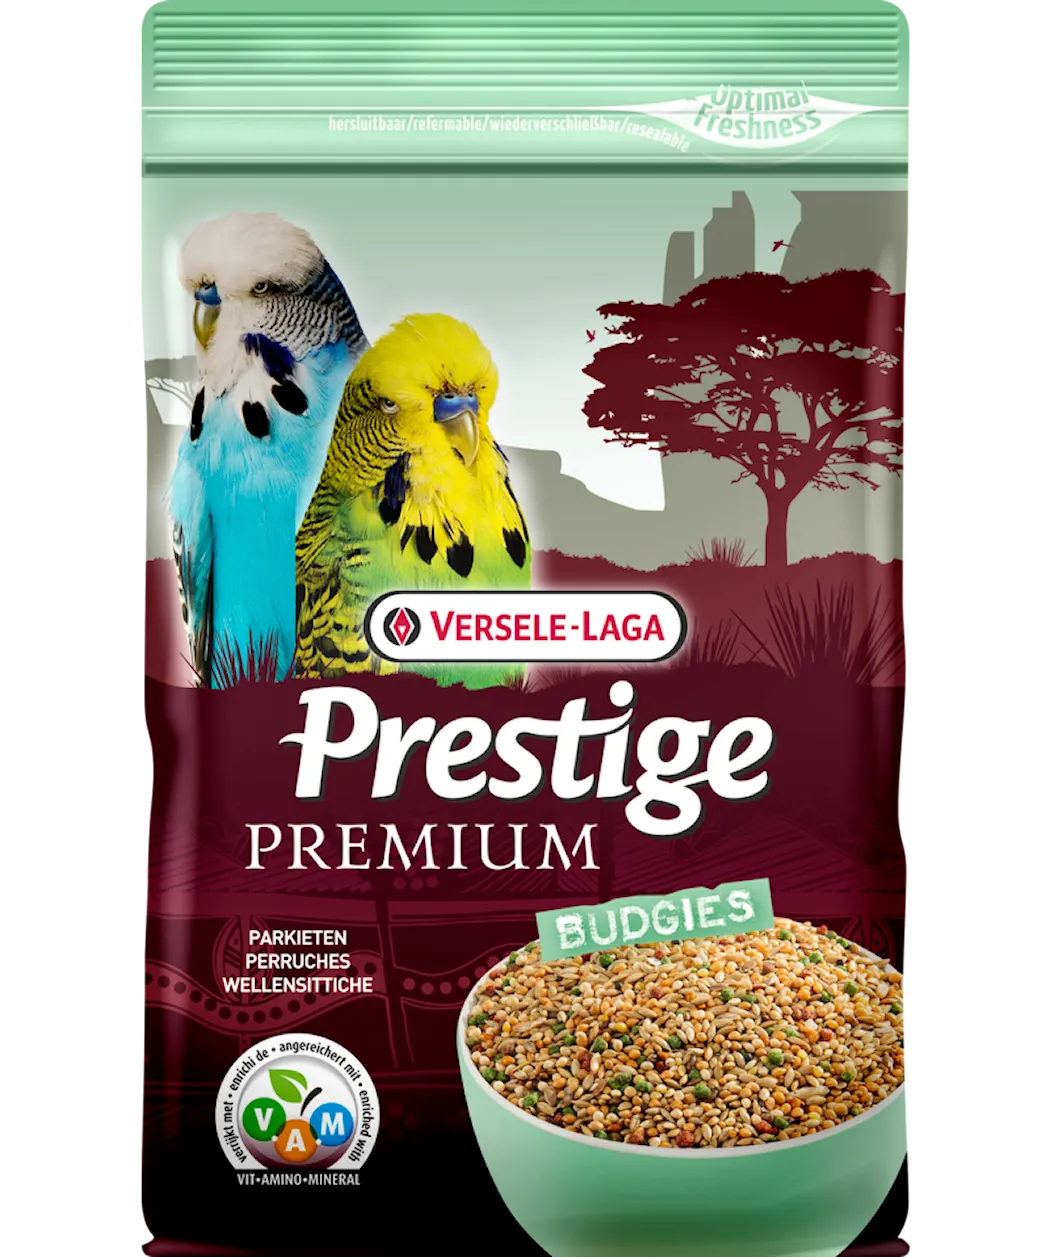 Versele-Laga Prestige Premium Budgie (Undulaatti)